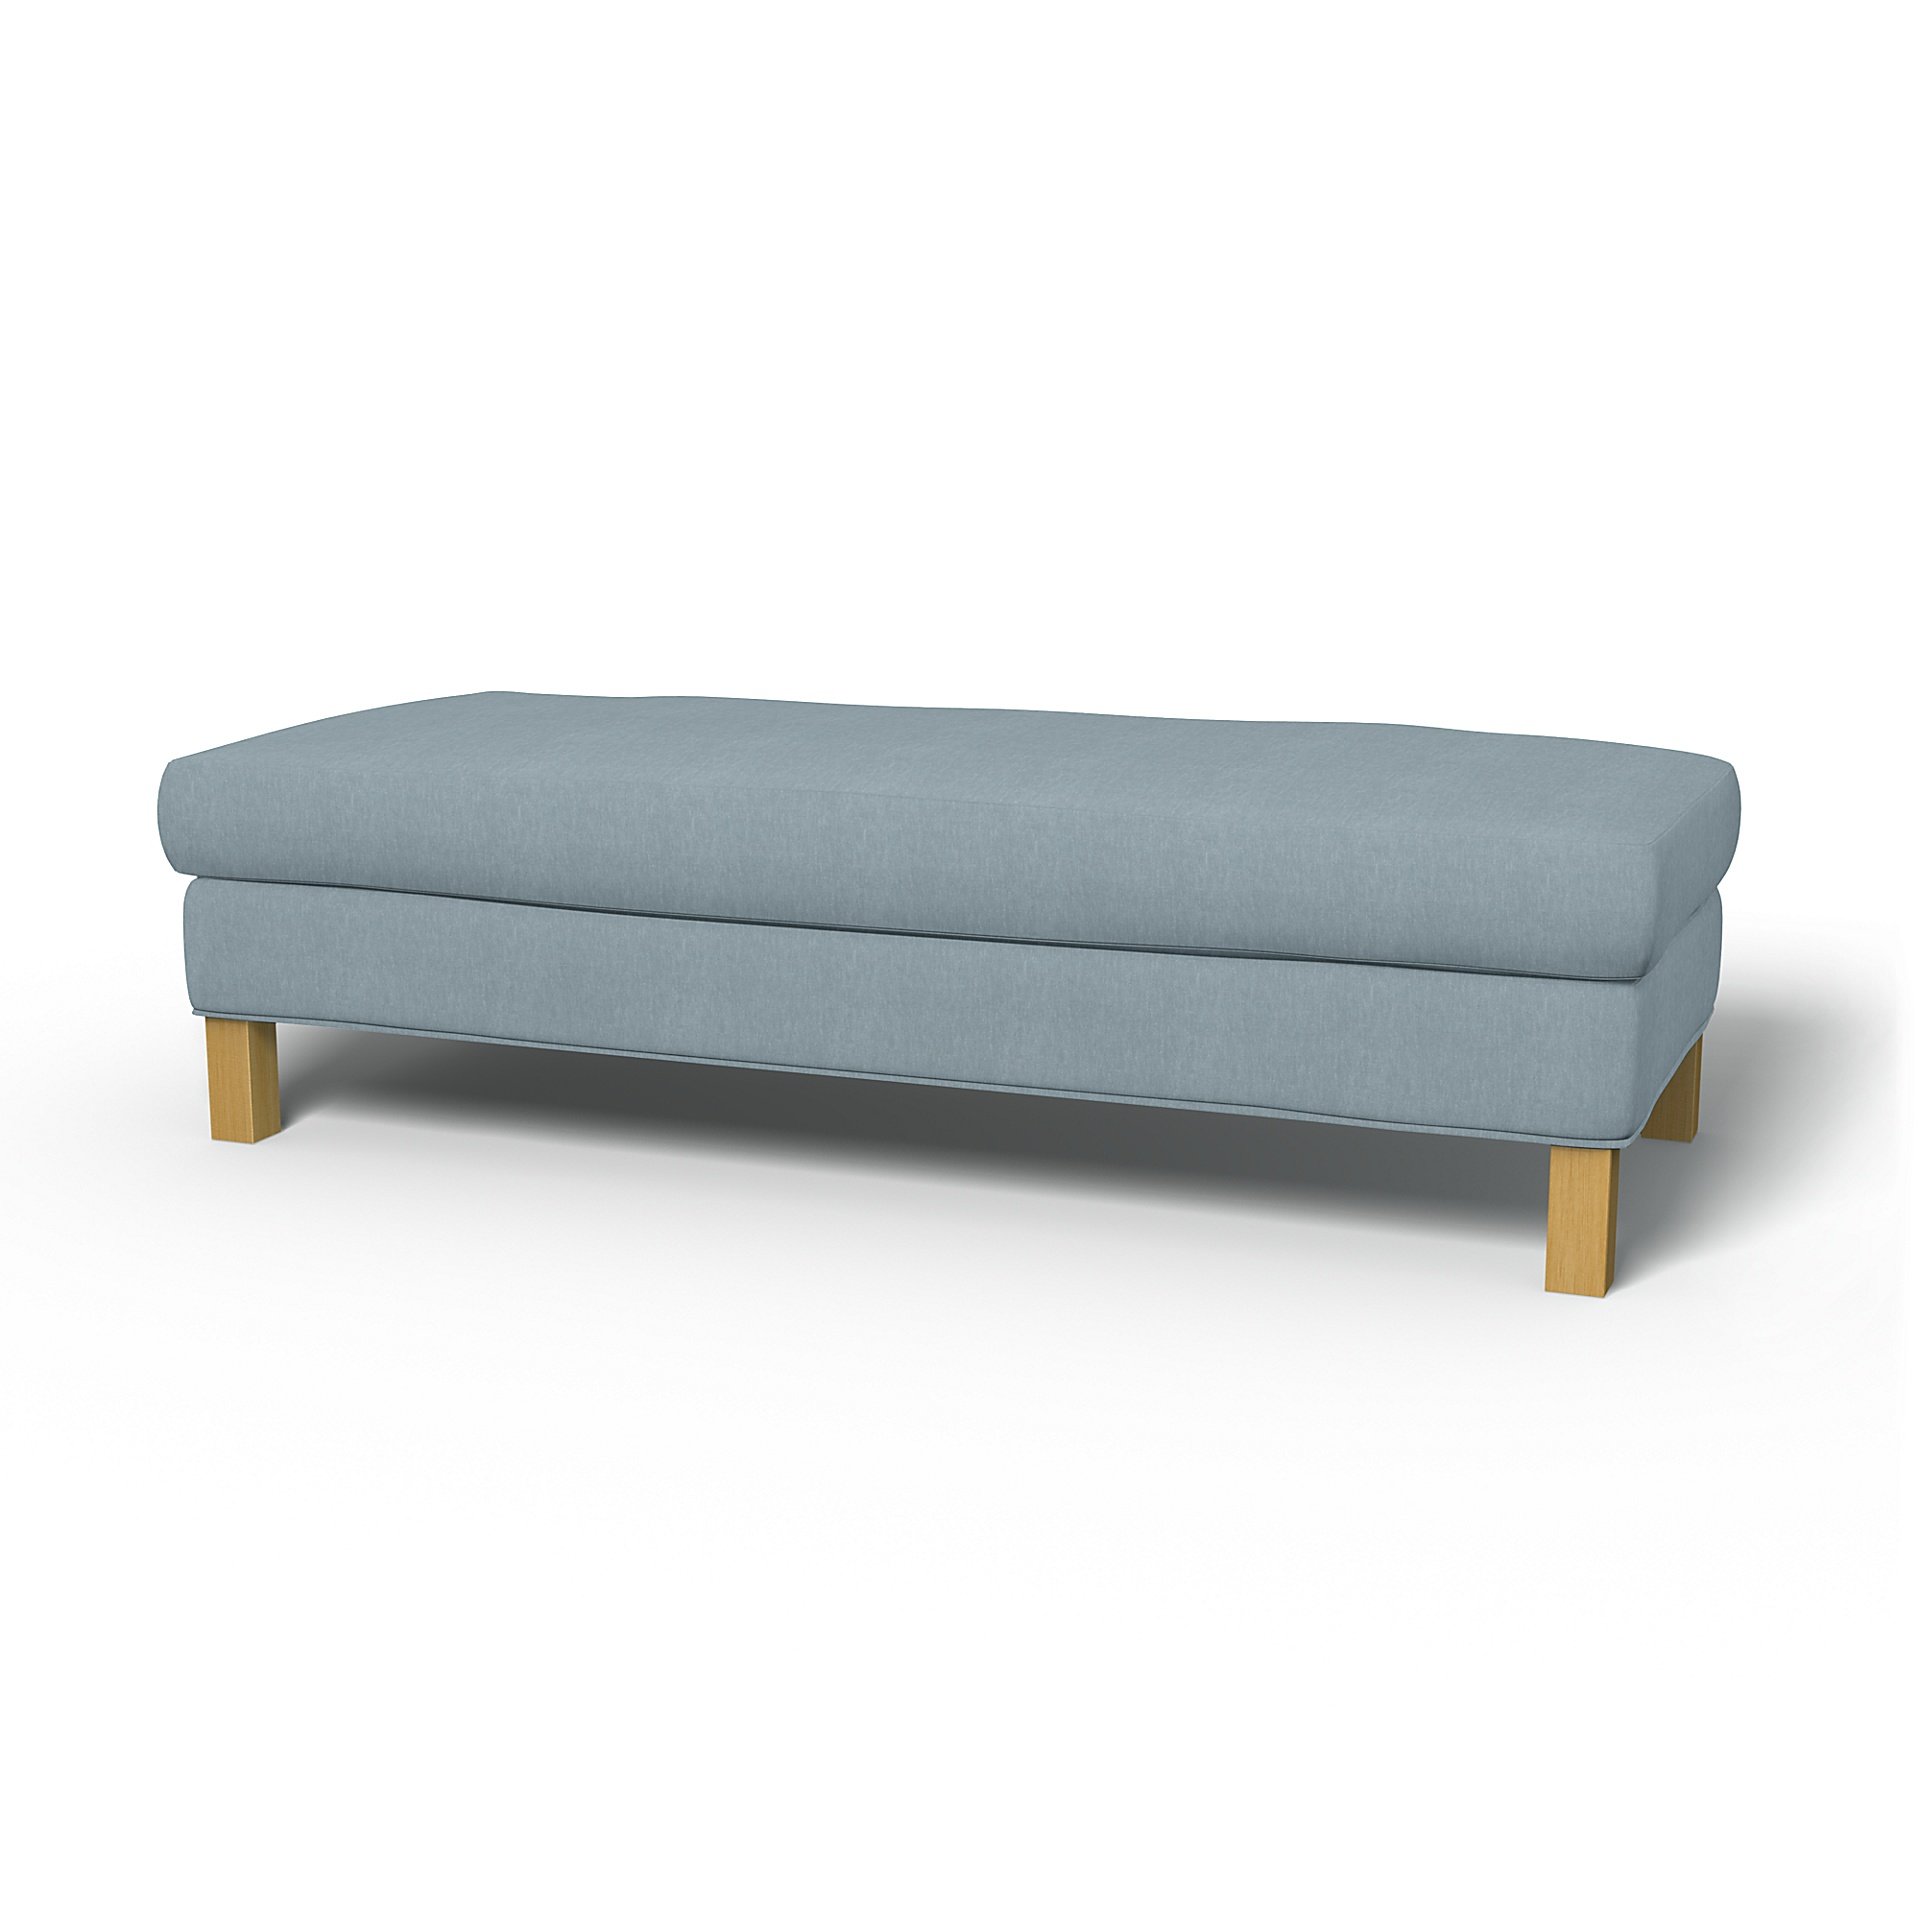 IKEA - Karlanda Bench Cover, Dusty Blue, Linen - Bemz